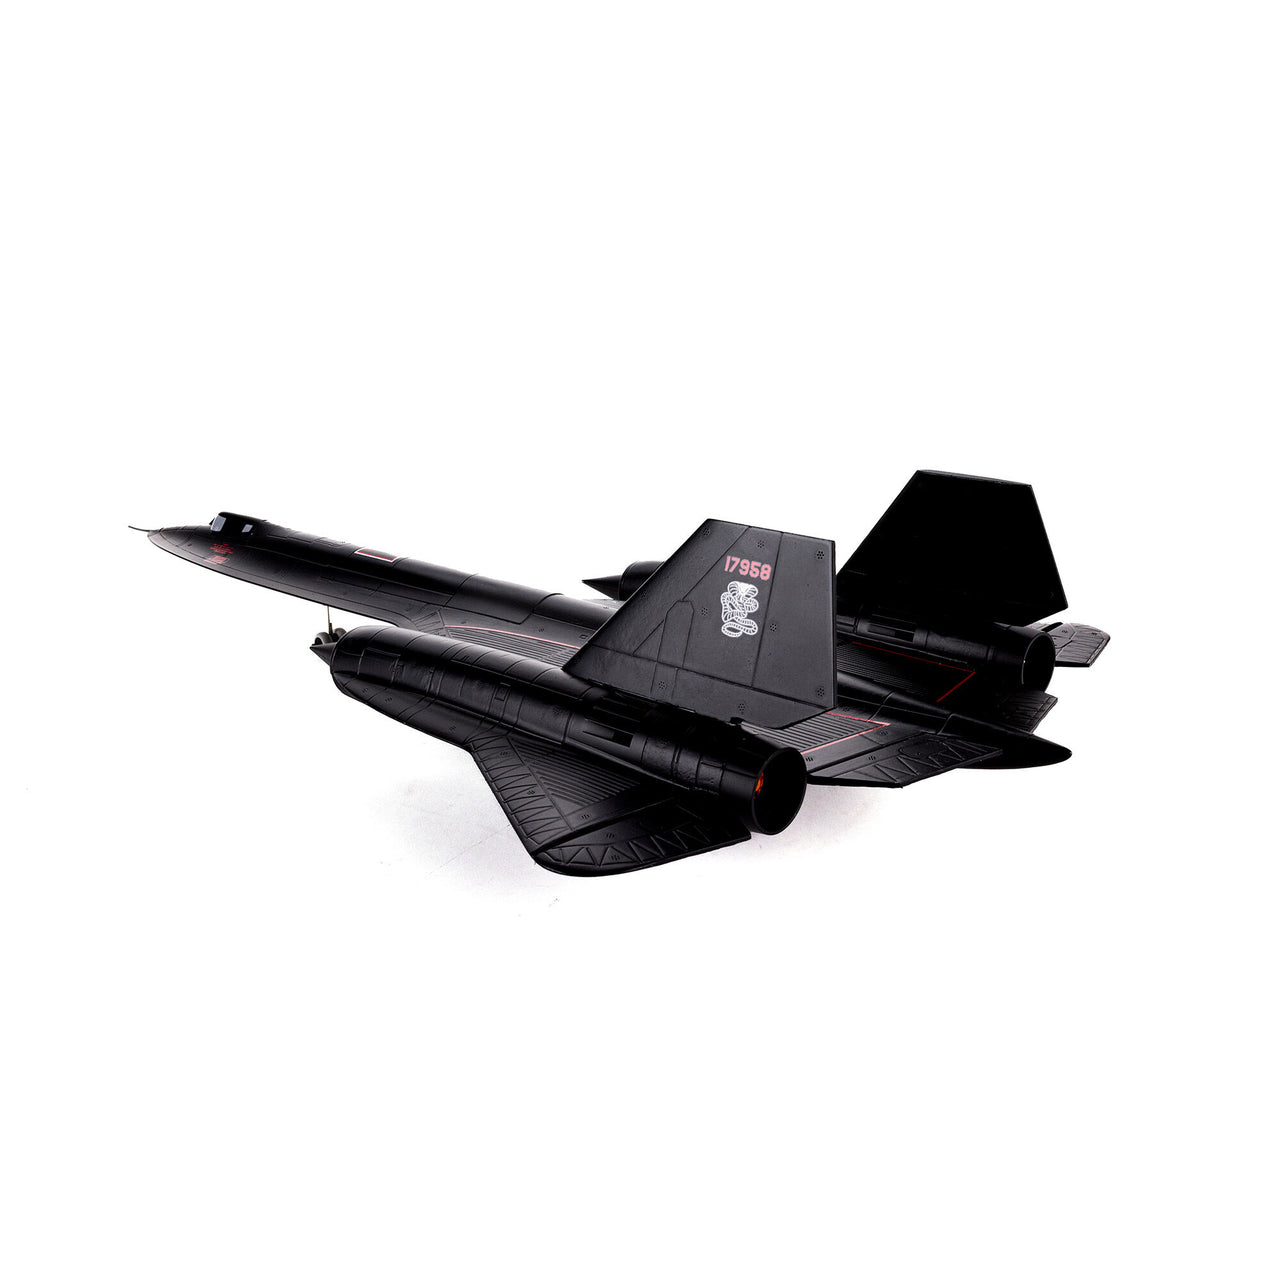 EFL02050 E-flite SR-71 Blackbird Twin 40 mm EDF BNF Basic avec AS3X et SAFE Select 